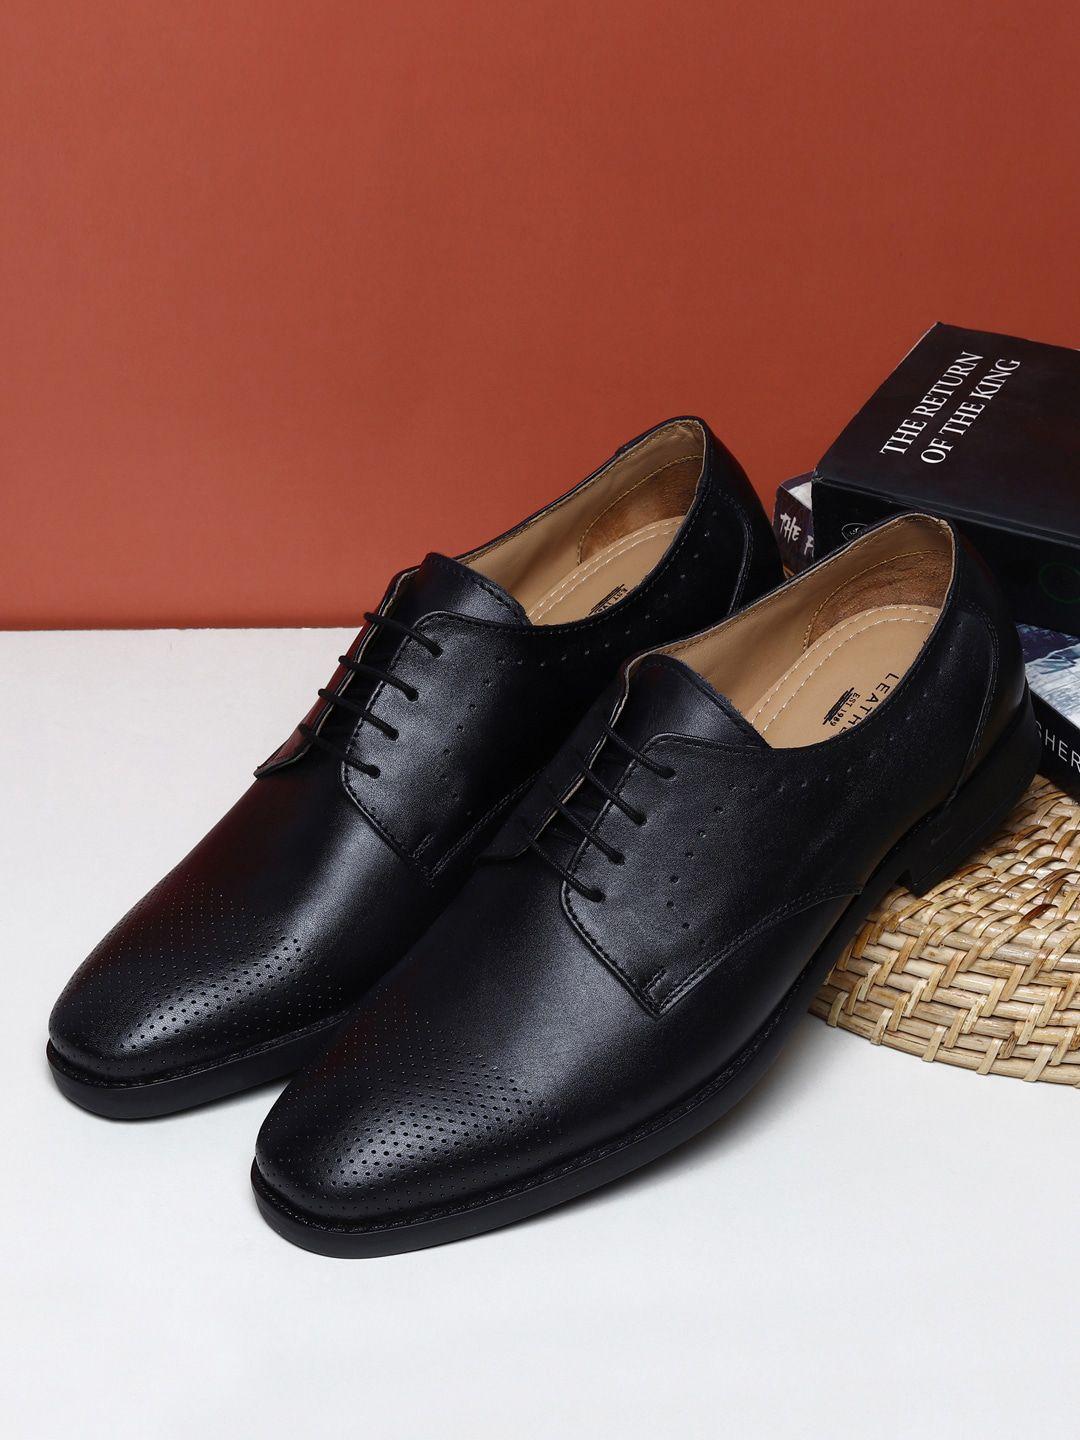 teakwood leathers men black textured leather formal shoes